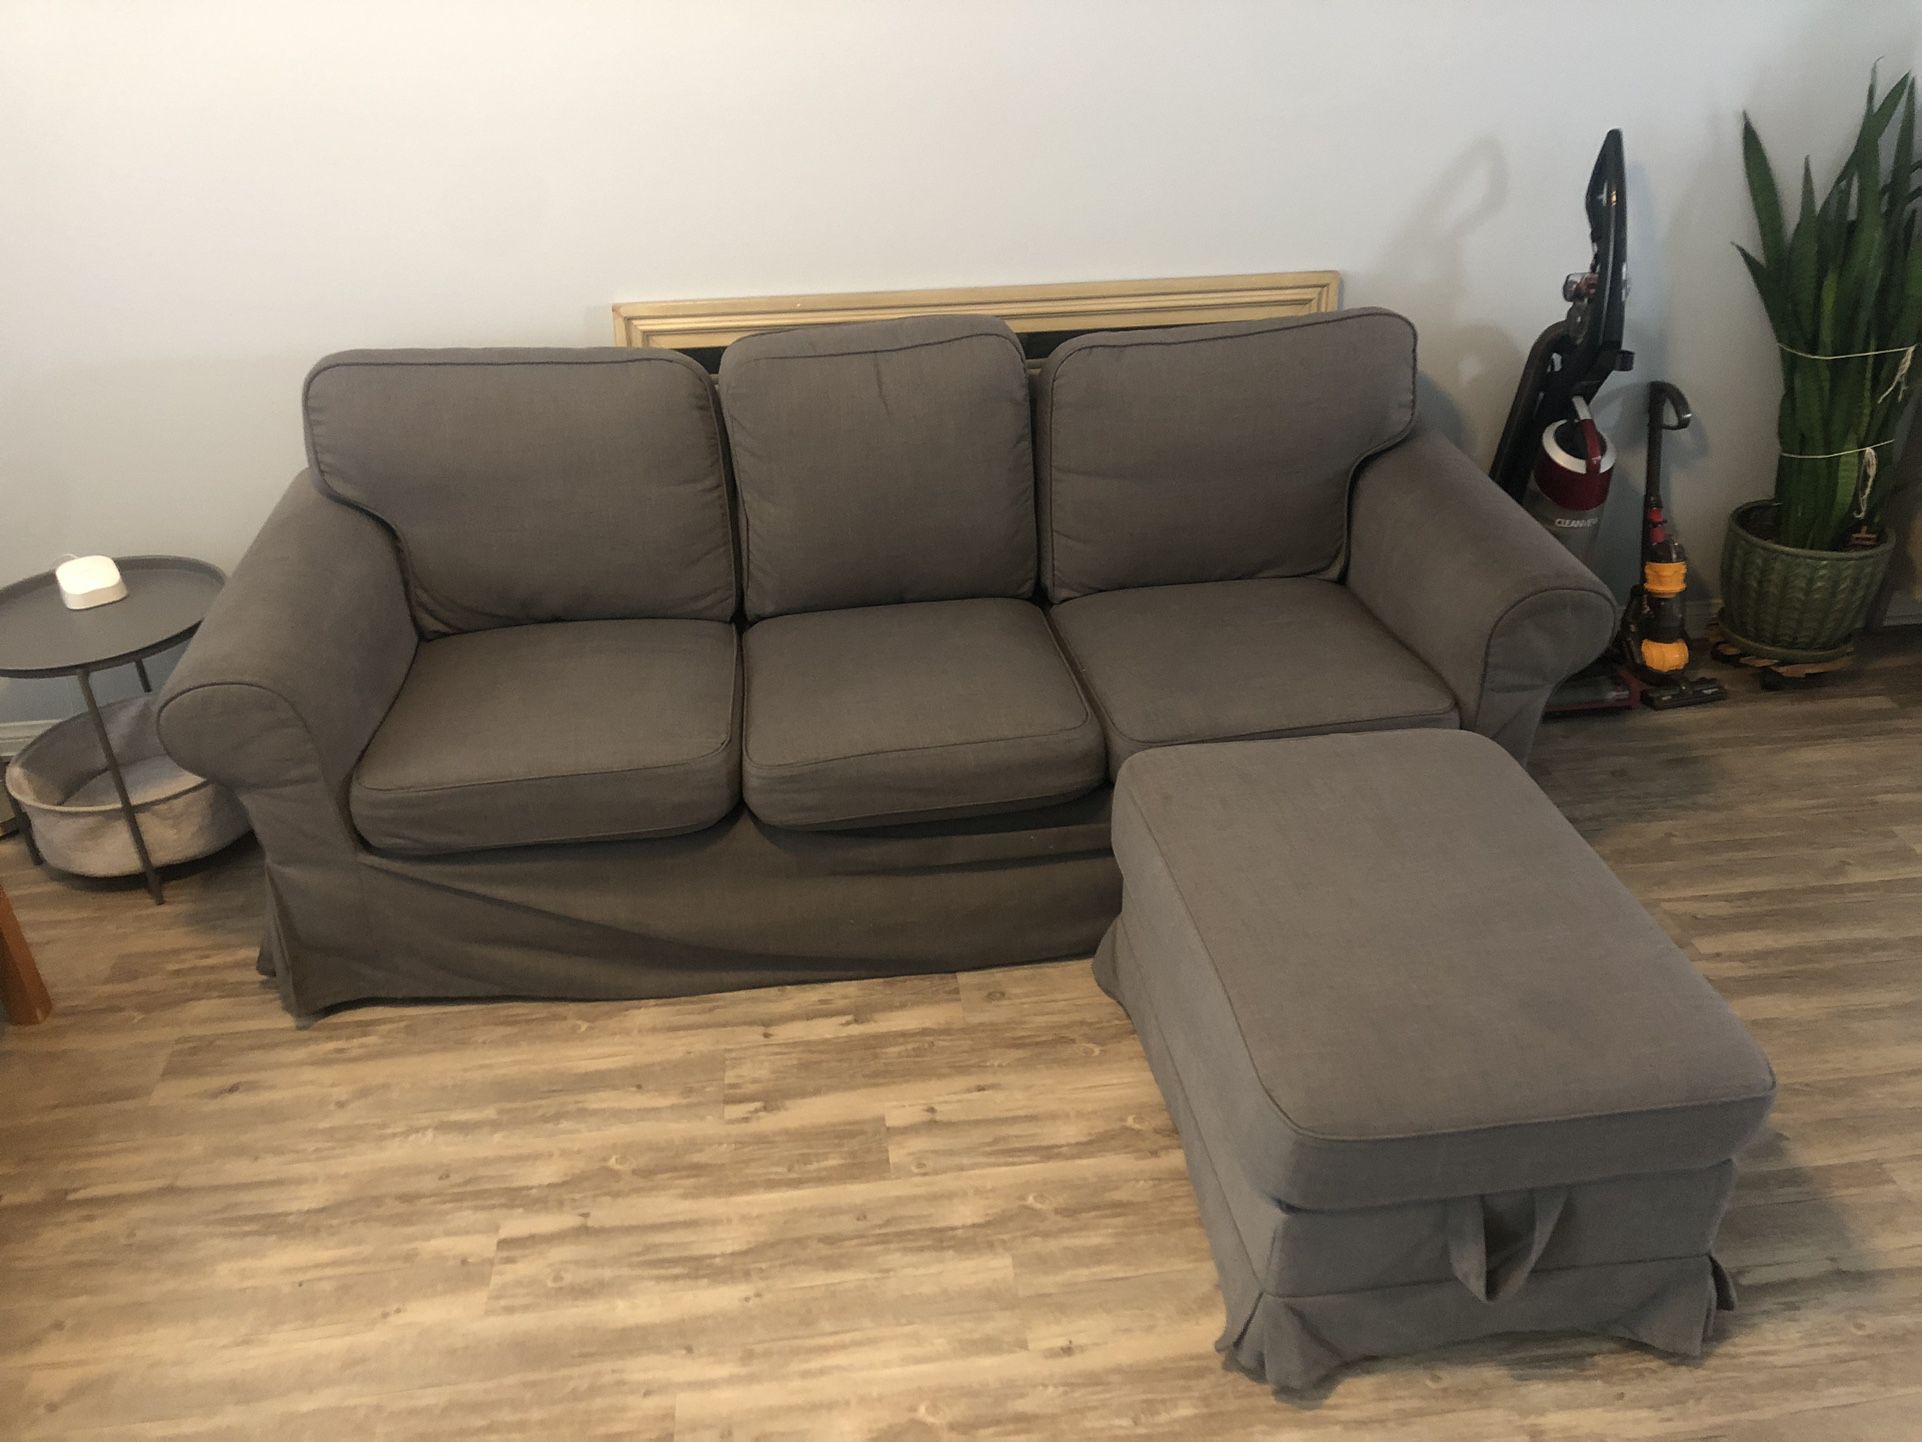 IKEA Couch w/ Ottoman